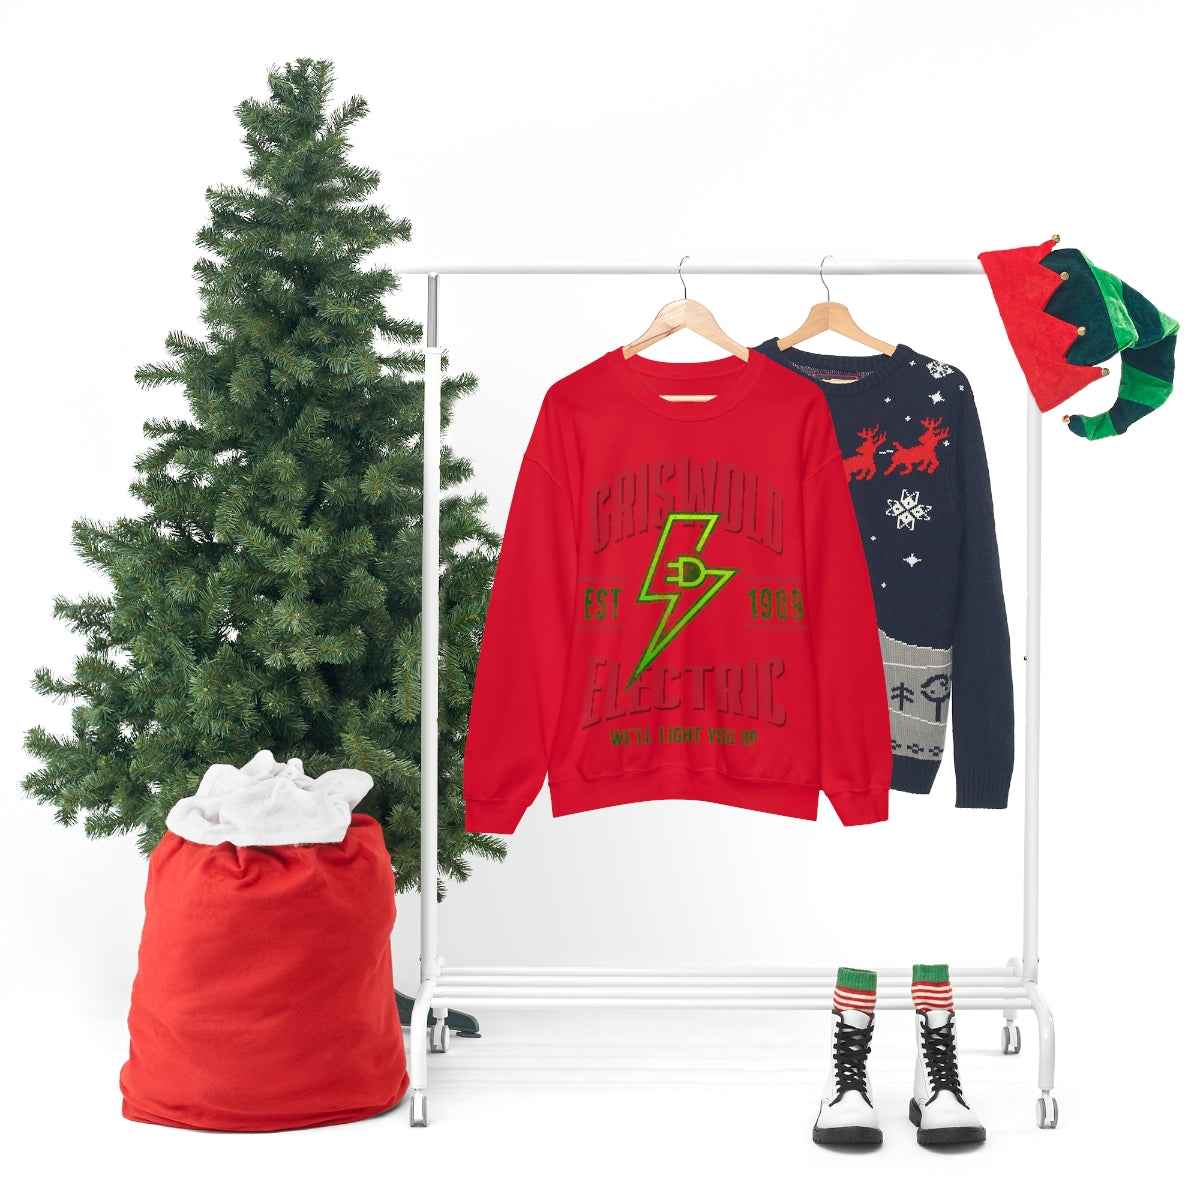 Griswold Electric Unisex Heavy Blend™ Crewneck Sweatshirt Christmas Vacation Griswold